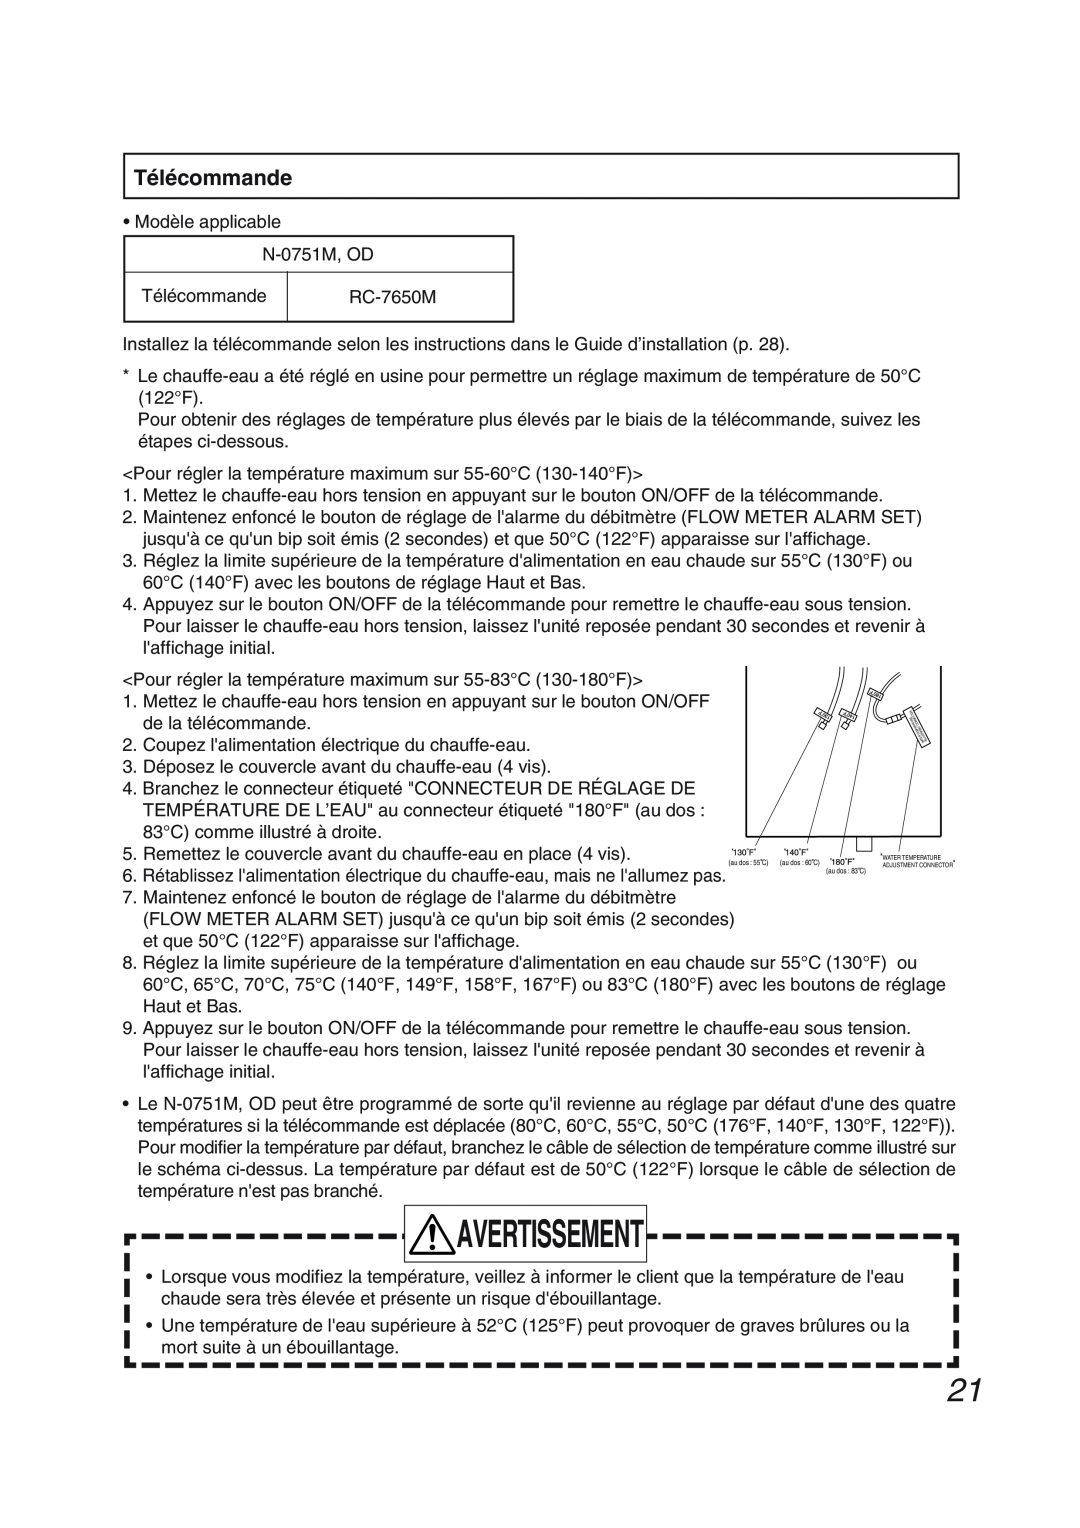 Pentax N-0751M-OD installation manual Télécommande, Avertissement 